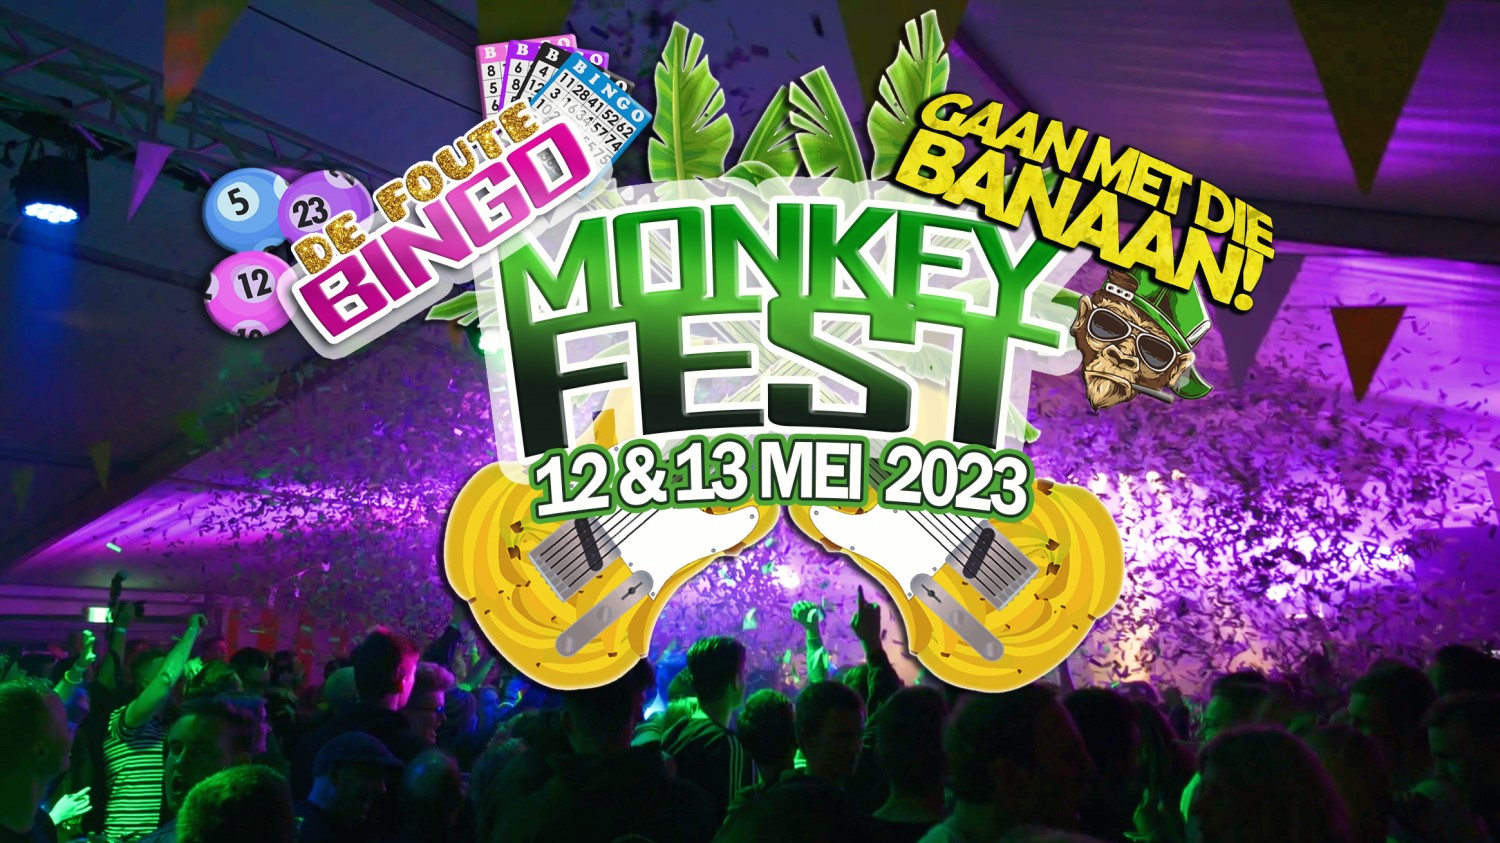 Monkeyfest 2023